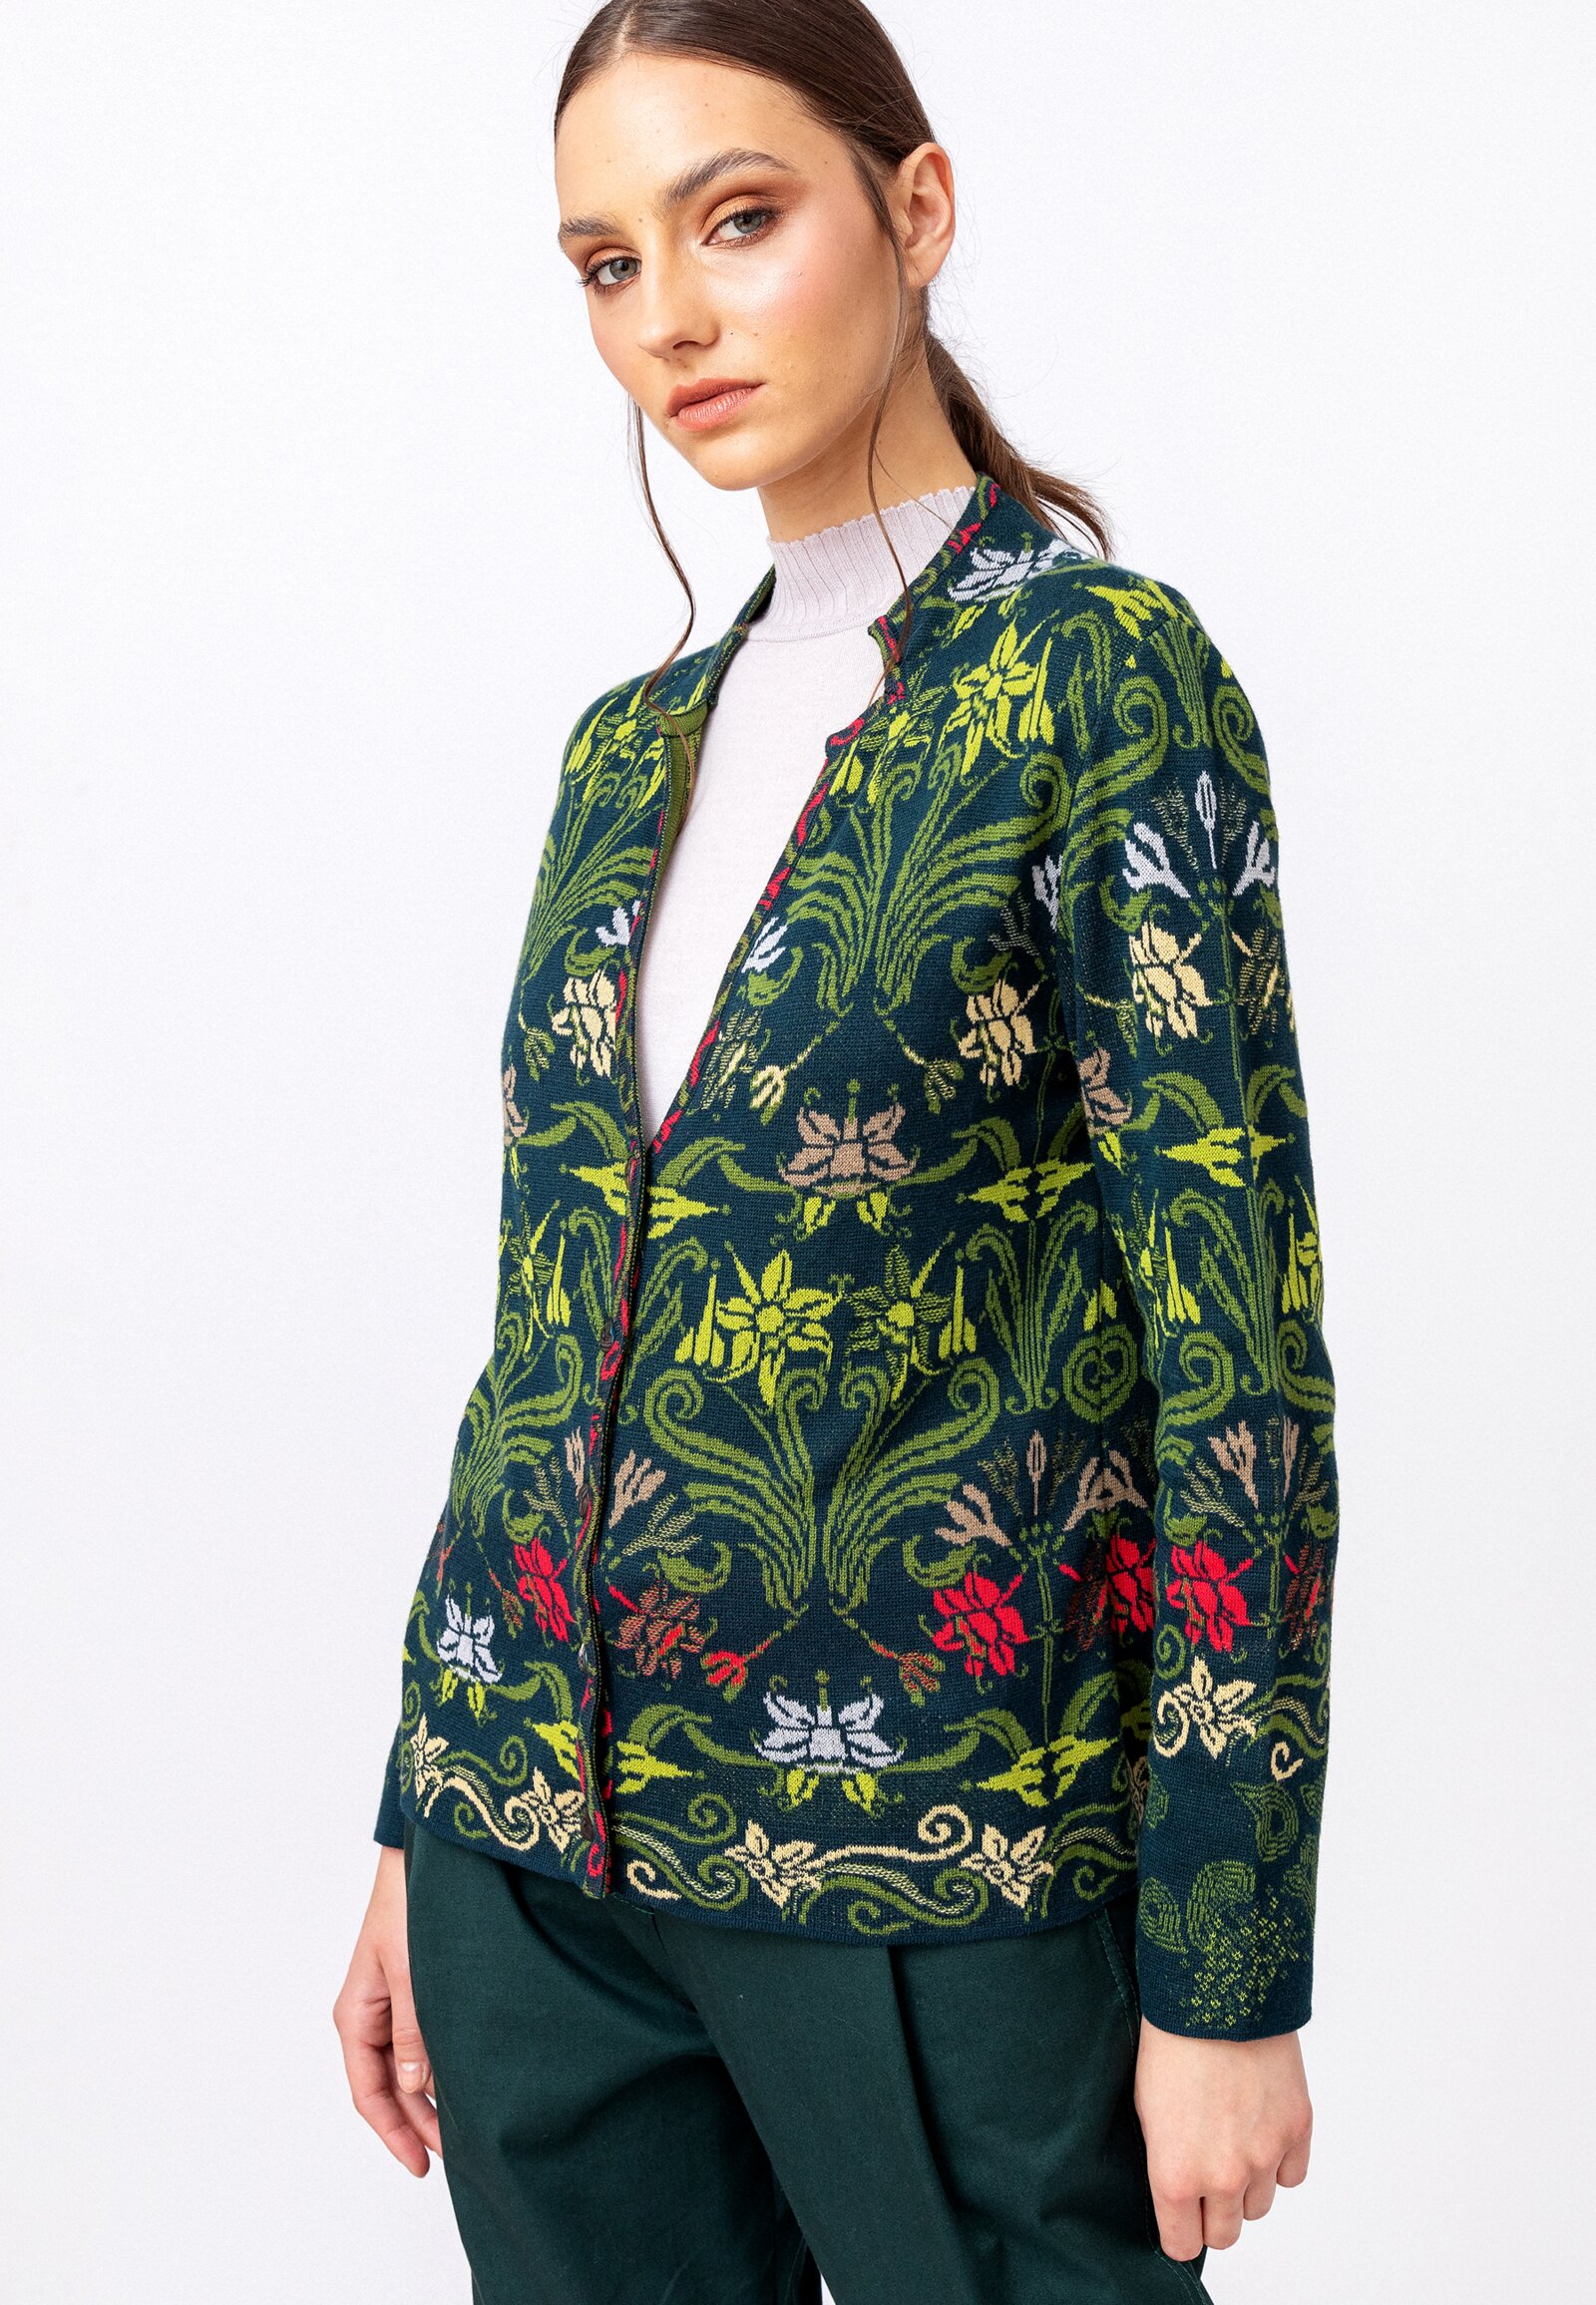 Jacquard Jacket, Grasset Floral Pattern - Knitted Jackets - Ivko Woman